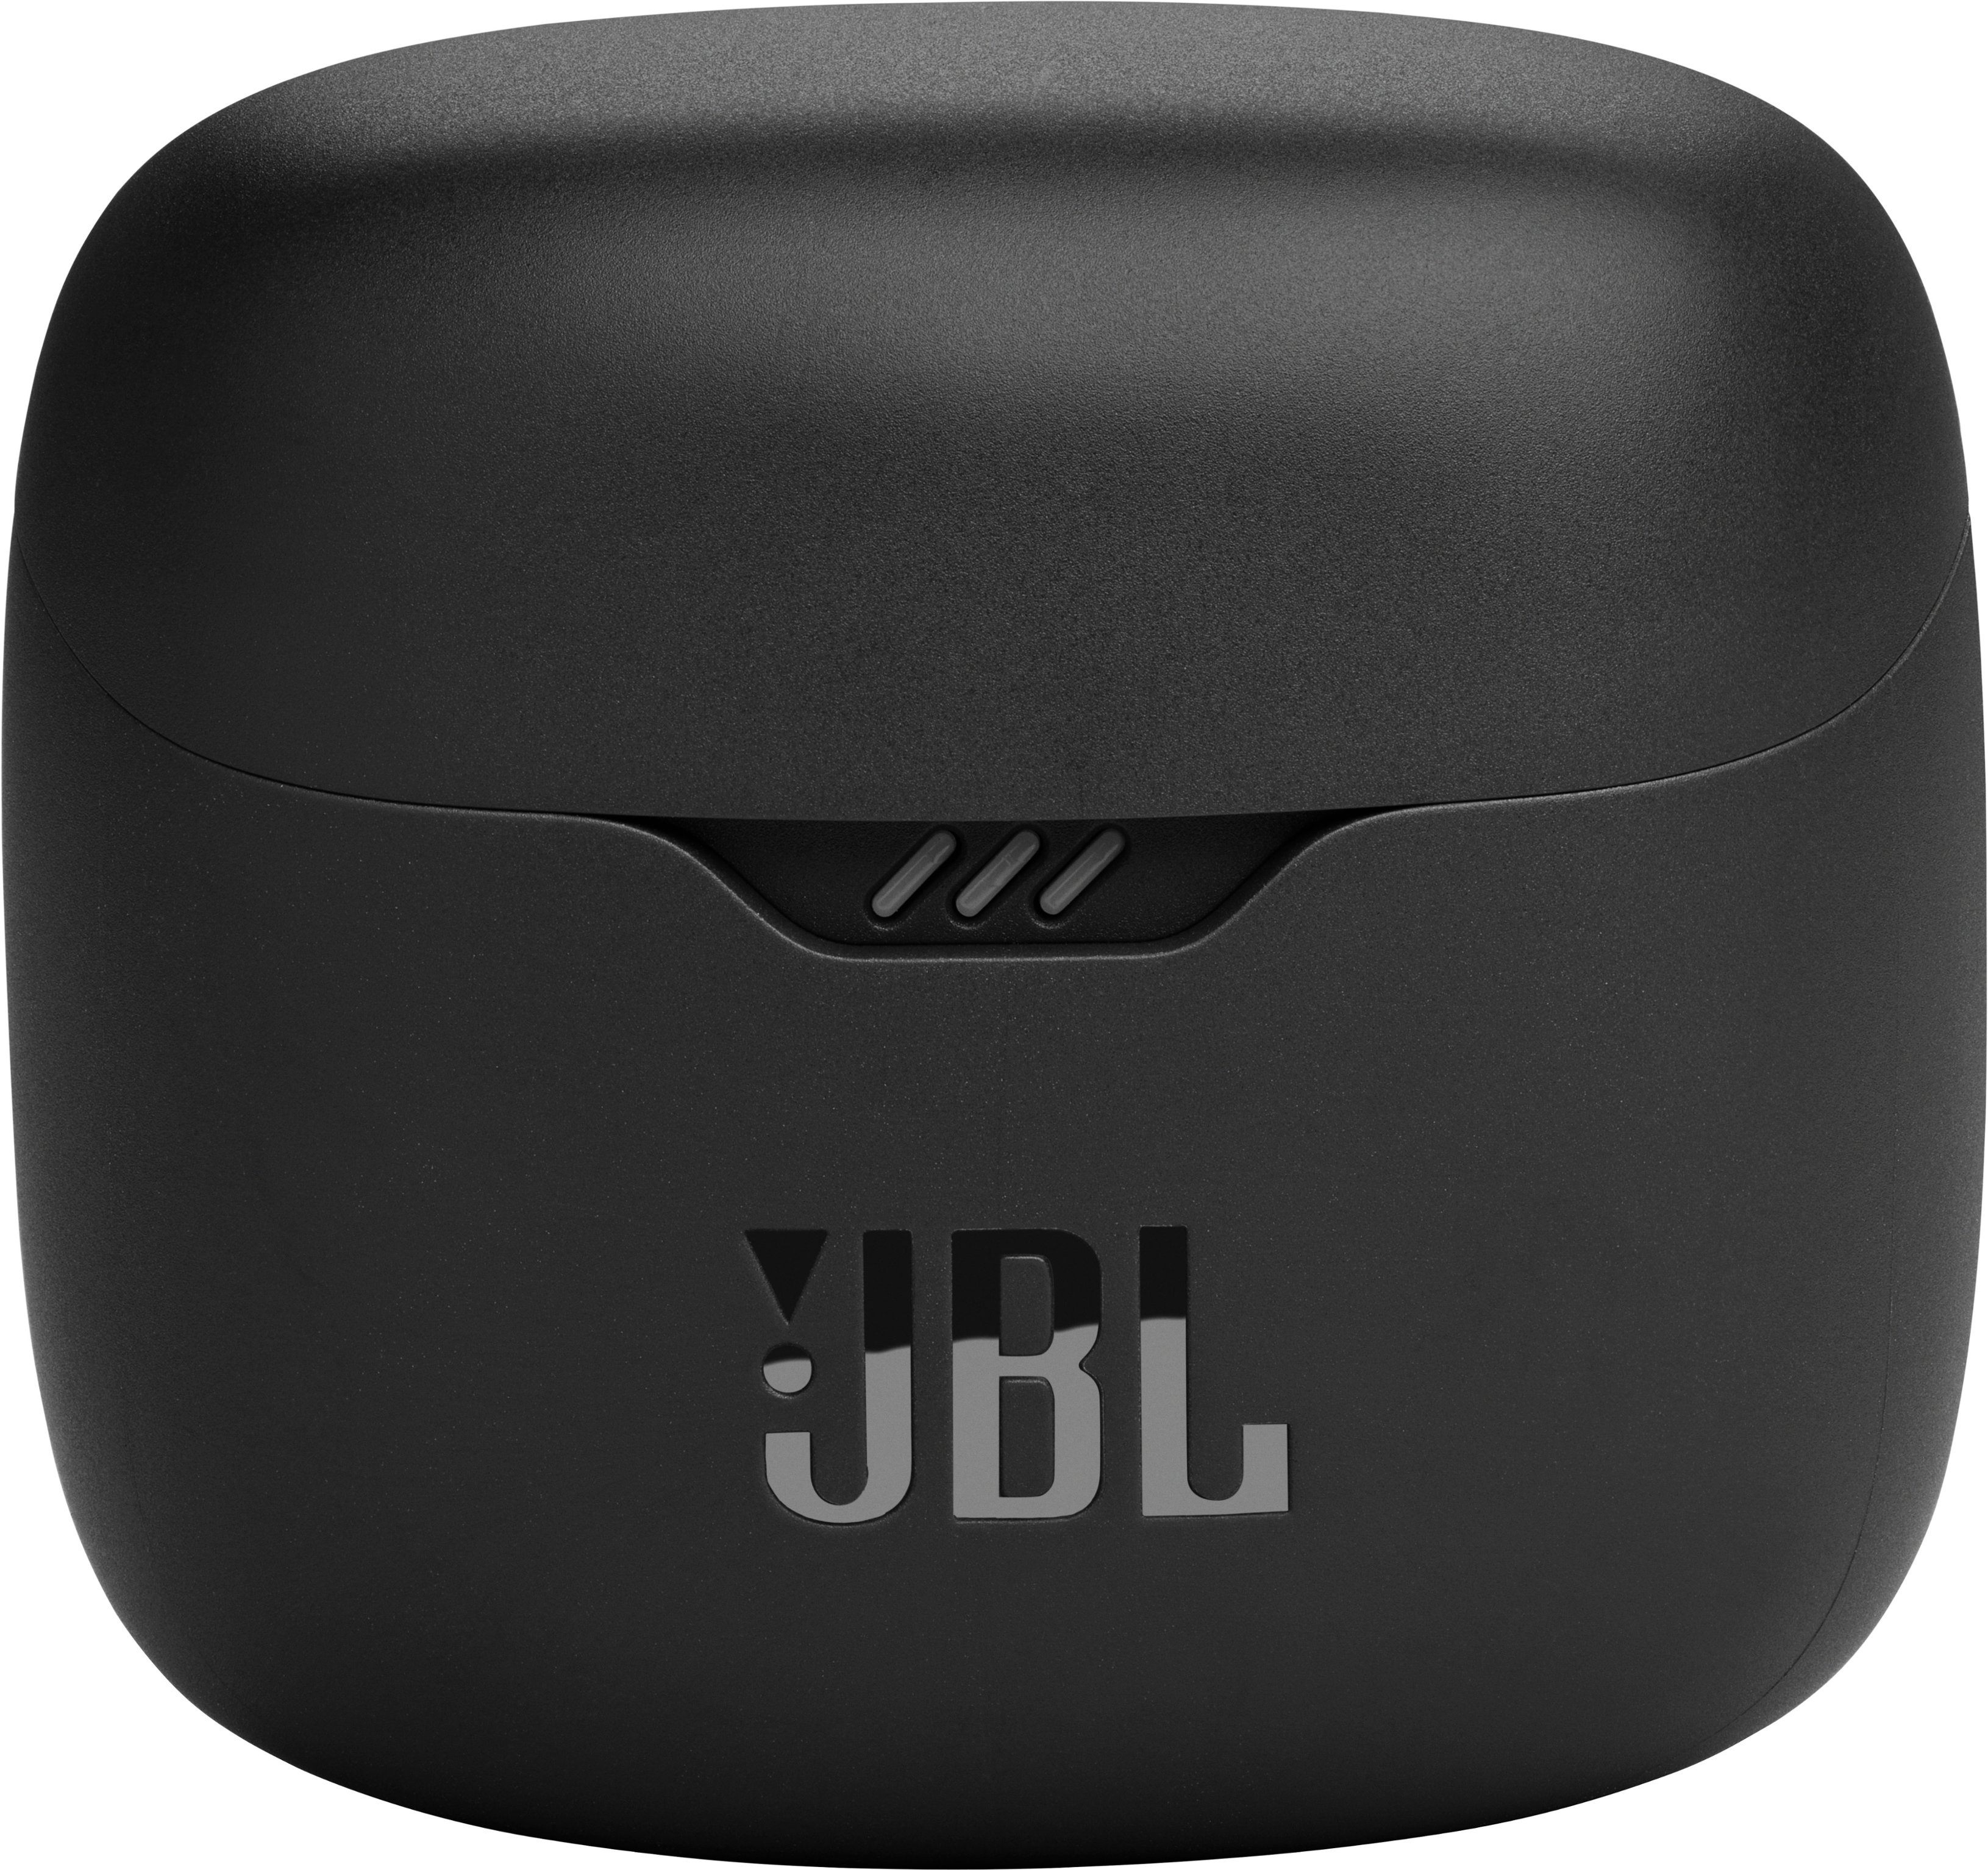 JBL WAVE FLEX True Wireless Bluetooth Headphones IP54 Waterproof Open  Design, Comfortable Fit, Crystal Clear Call Experience